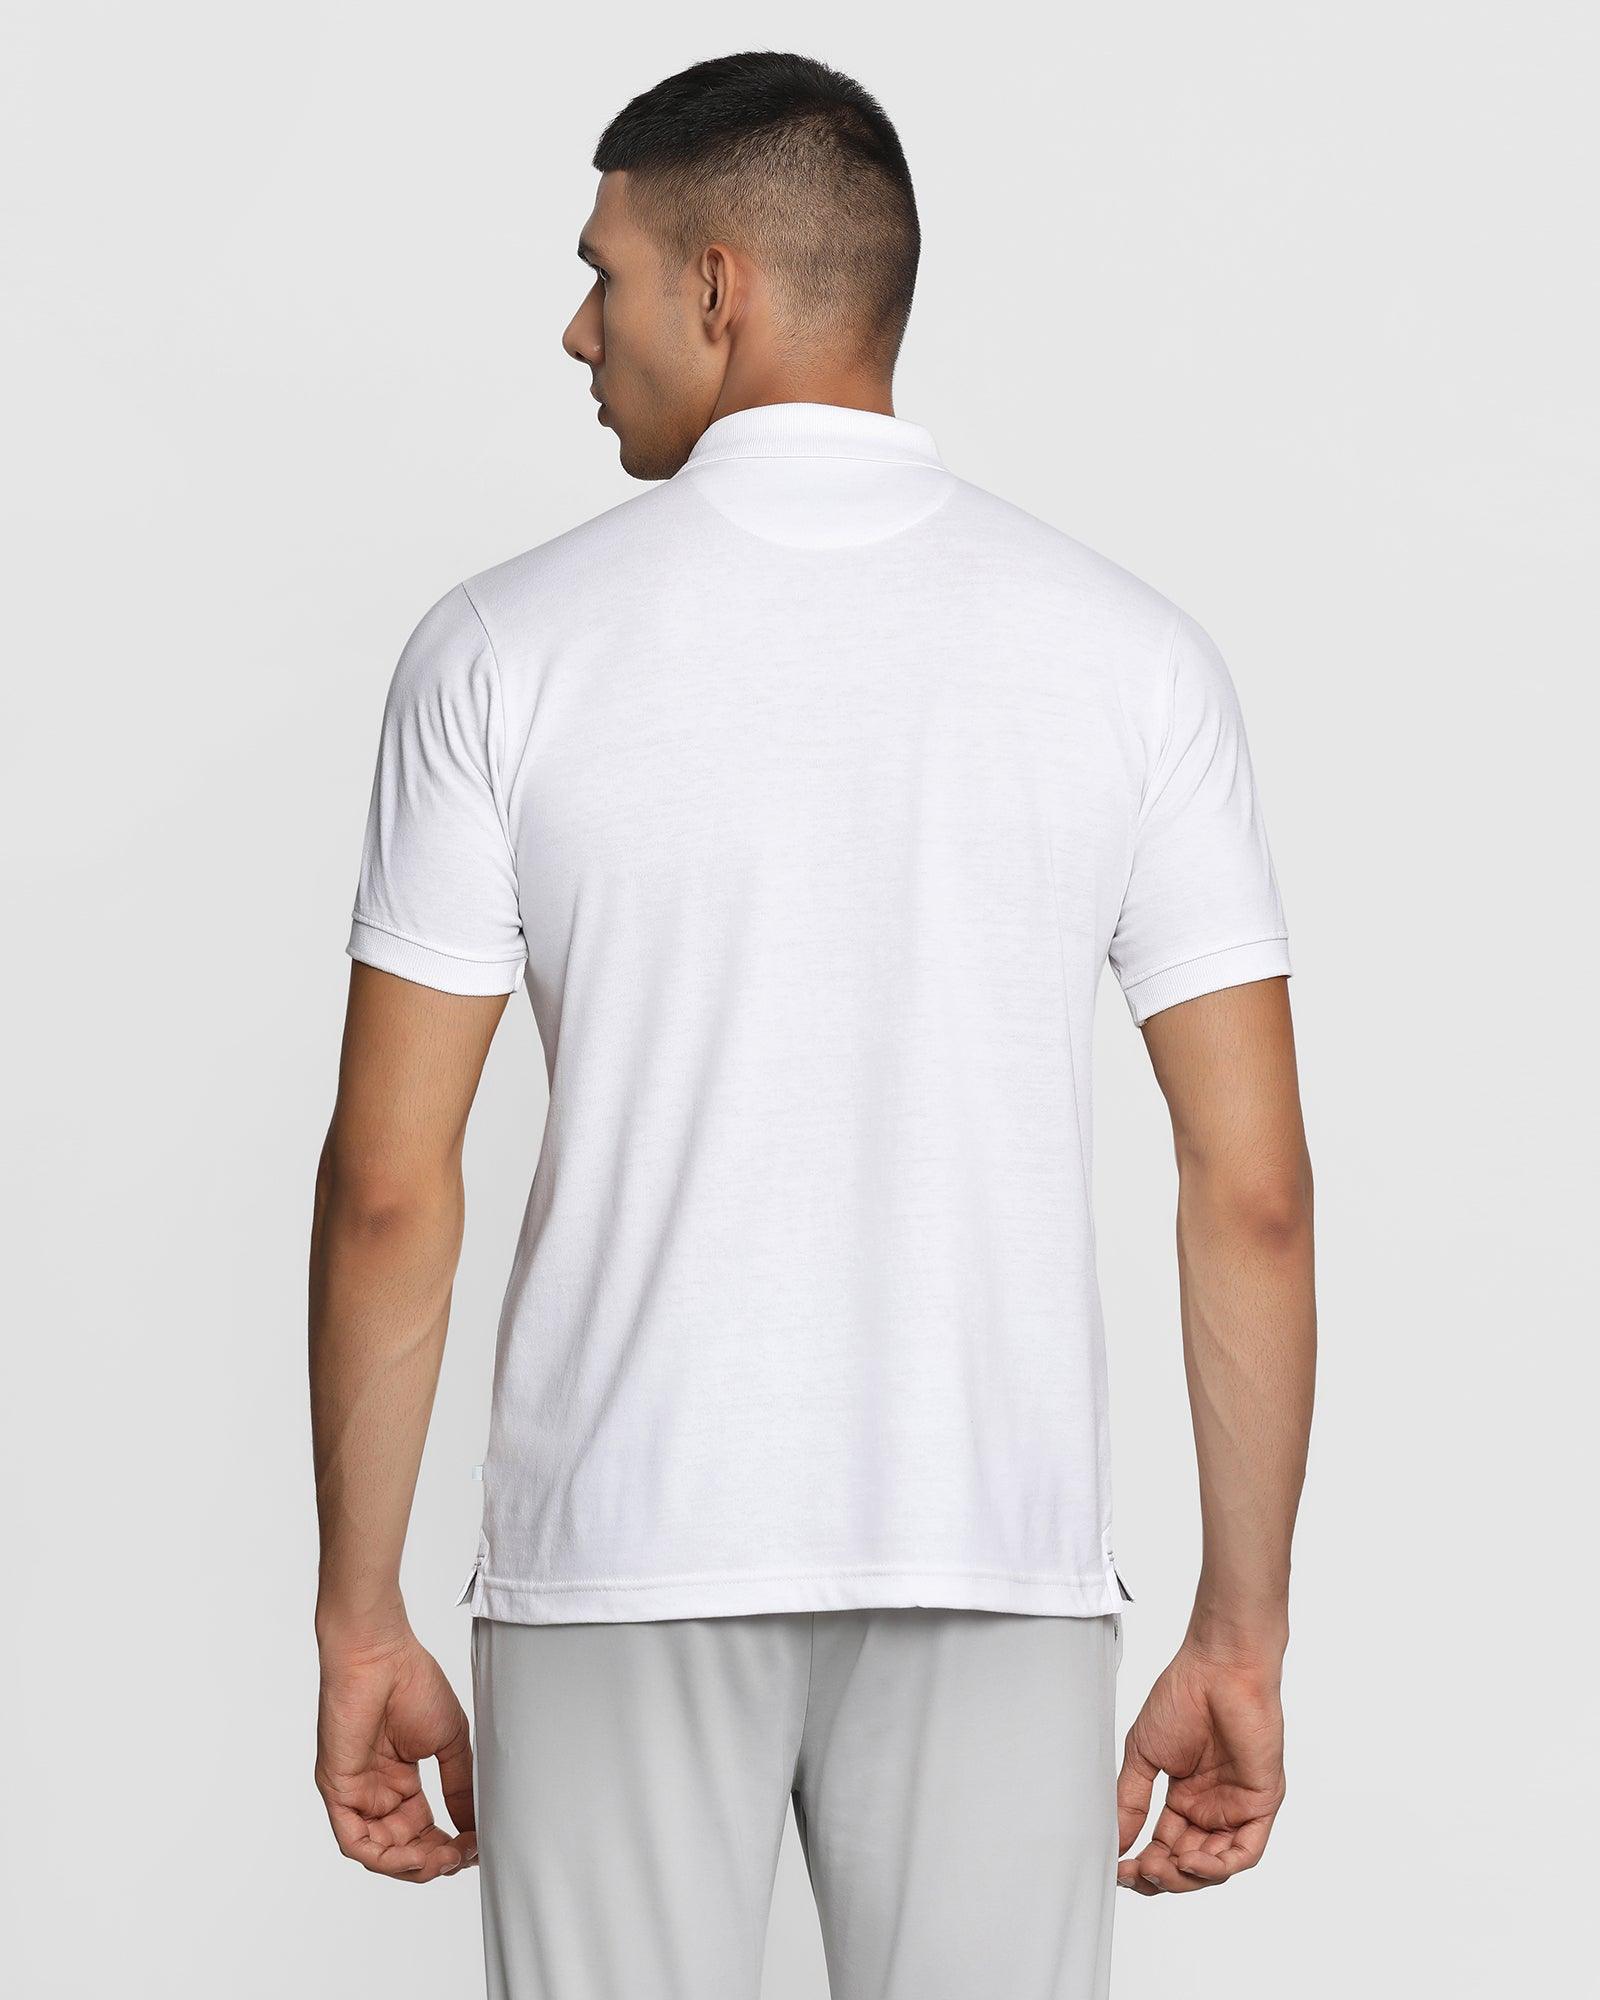 TechPro Polo White Solid T Shirt - Noah